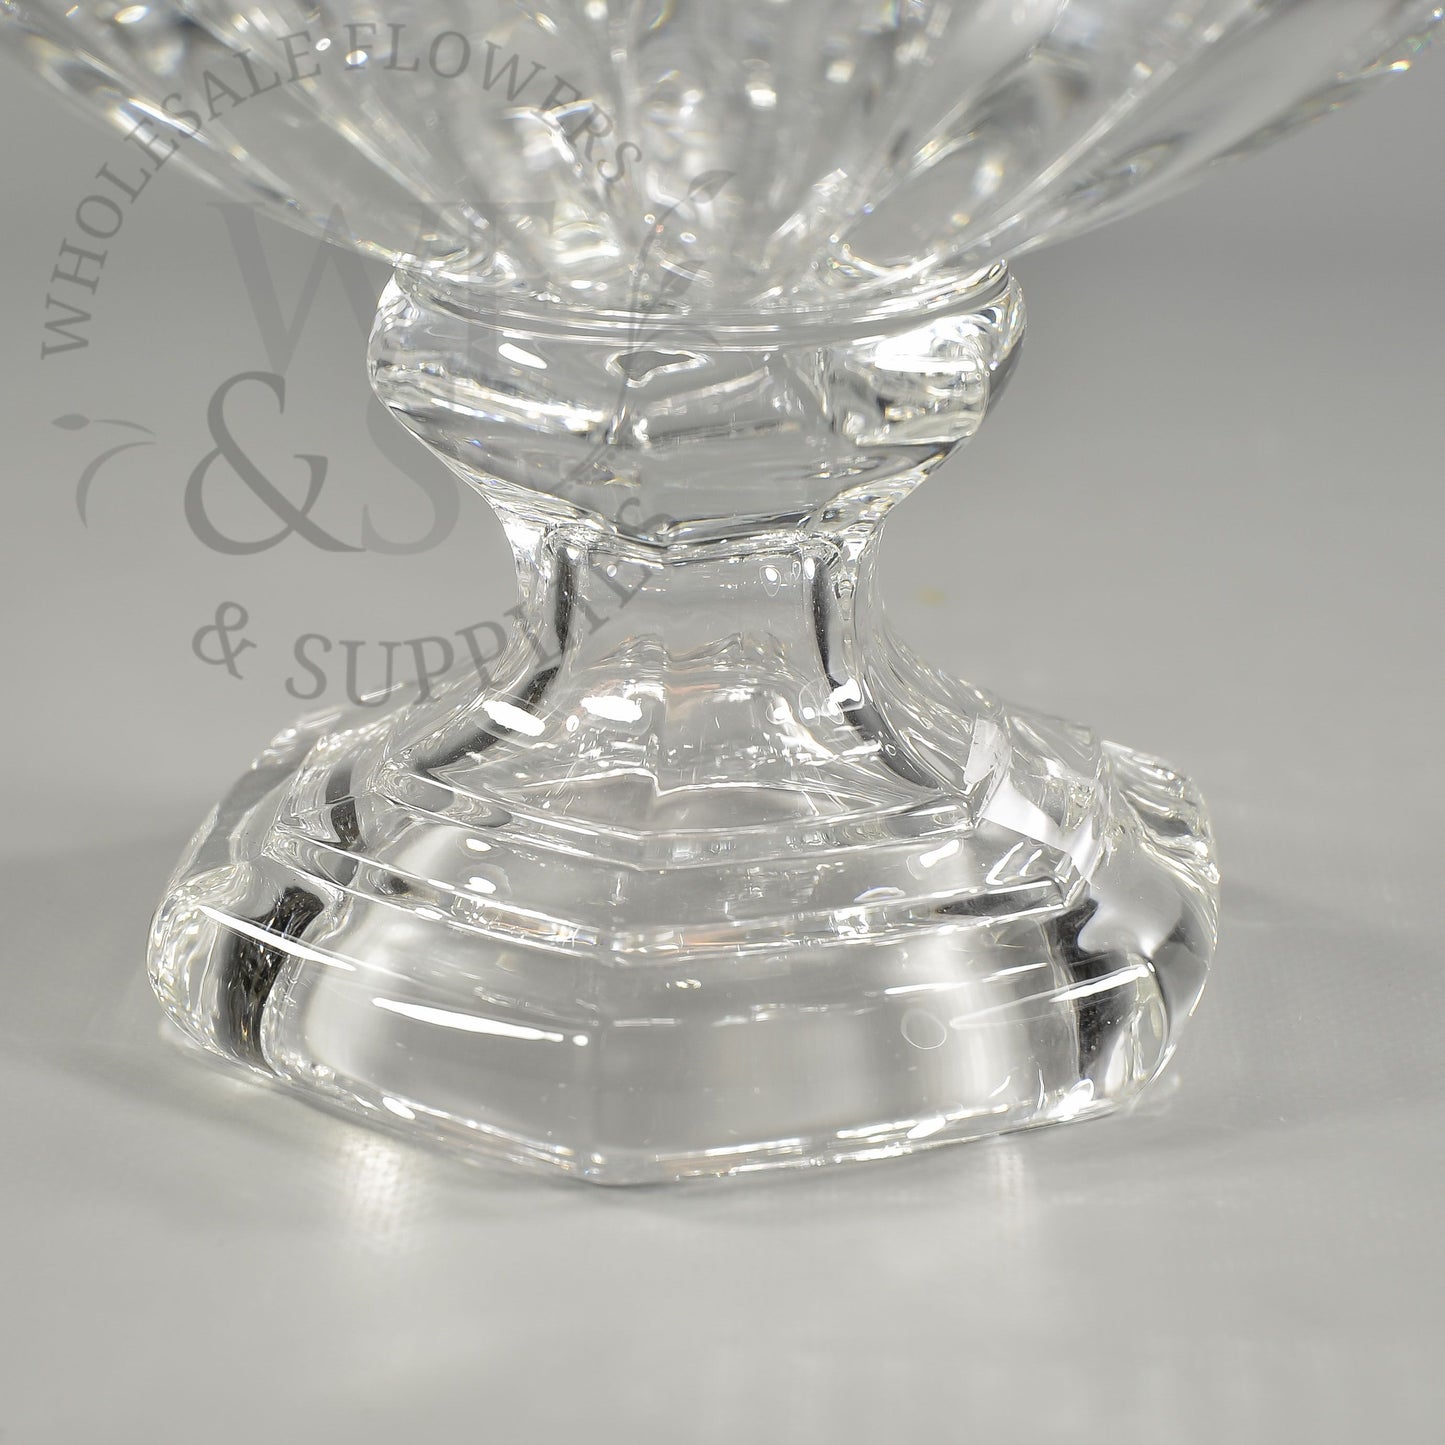 8" Omari Glass display bowl